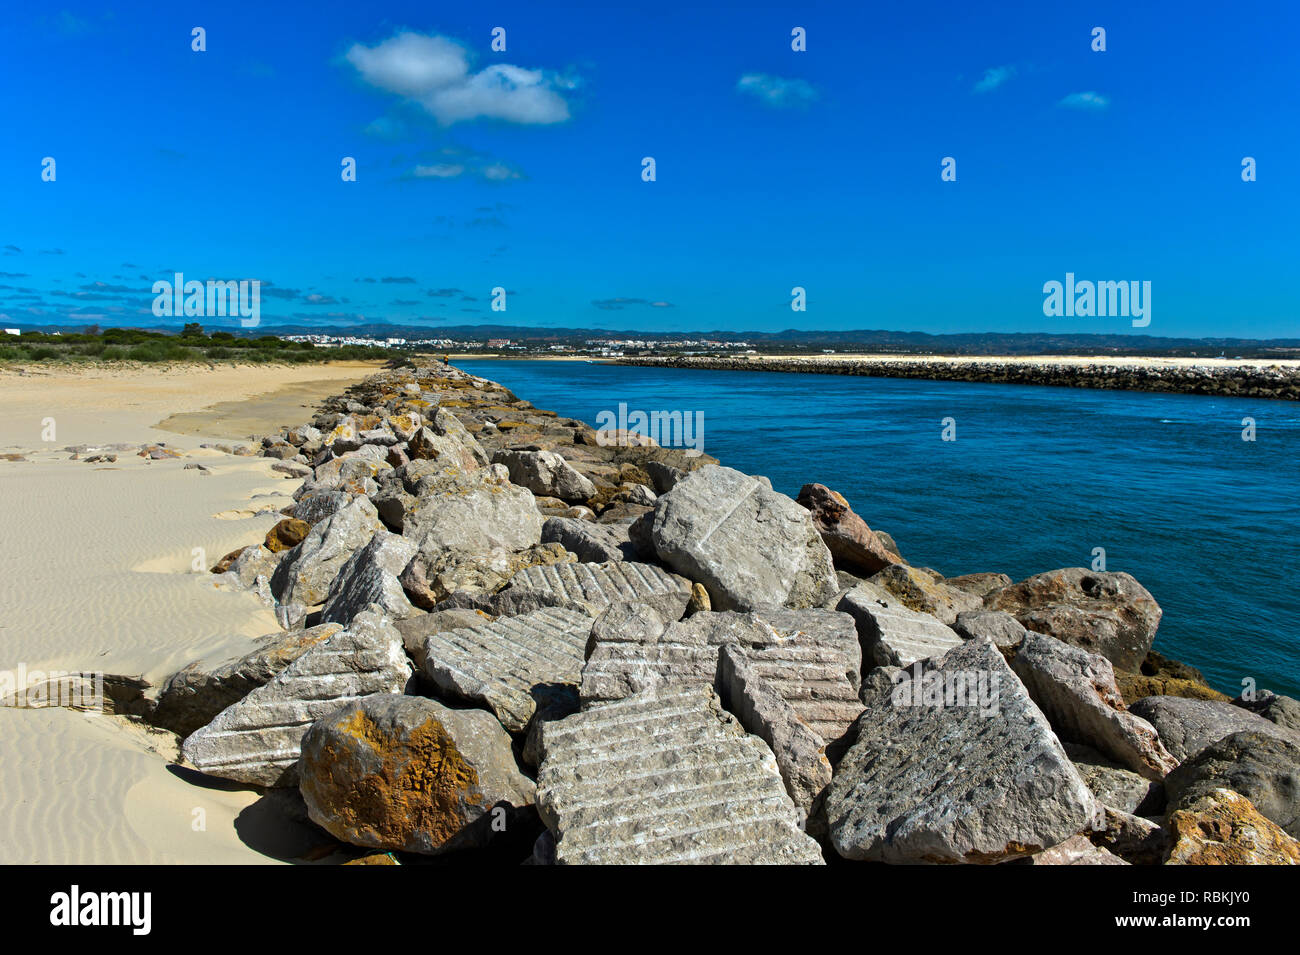 Felsbrocken als Schutz der litoral Zone gegen den Anstieg des Meeresspiegels an der Mündung des Fluss Gilao, Tavira Insel Ilha de Tavira, Tavira, Algarve, Stockfoto